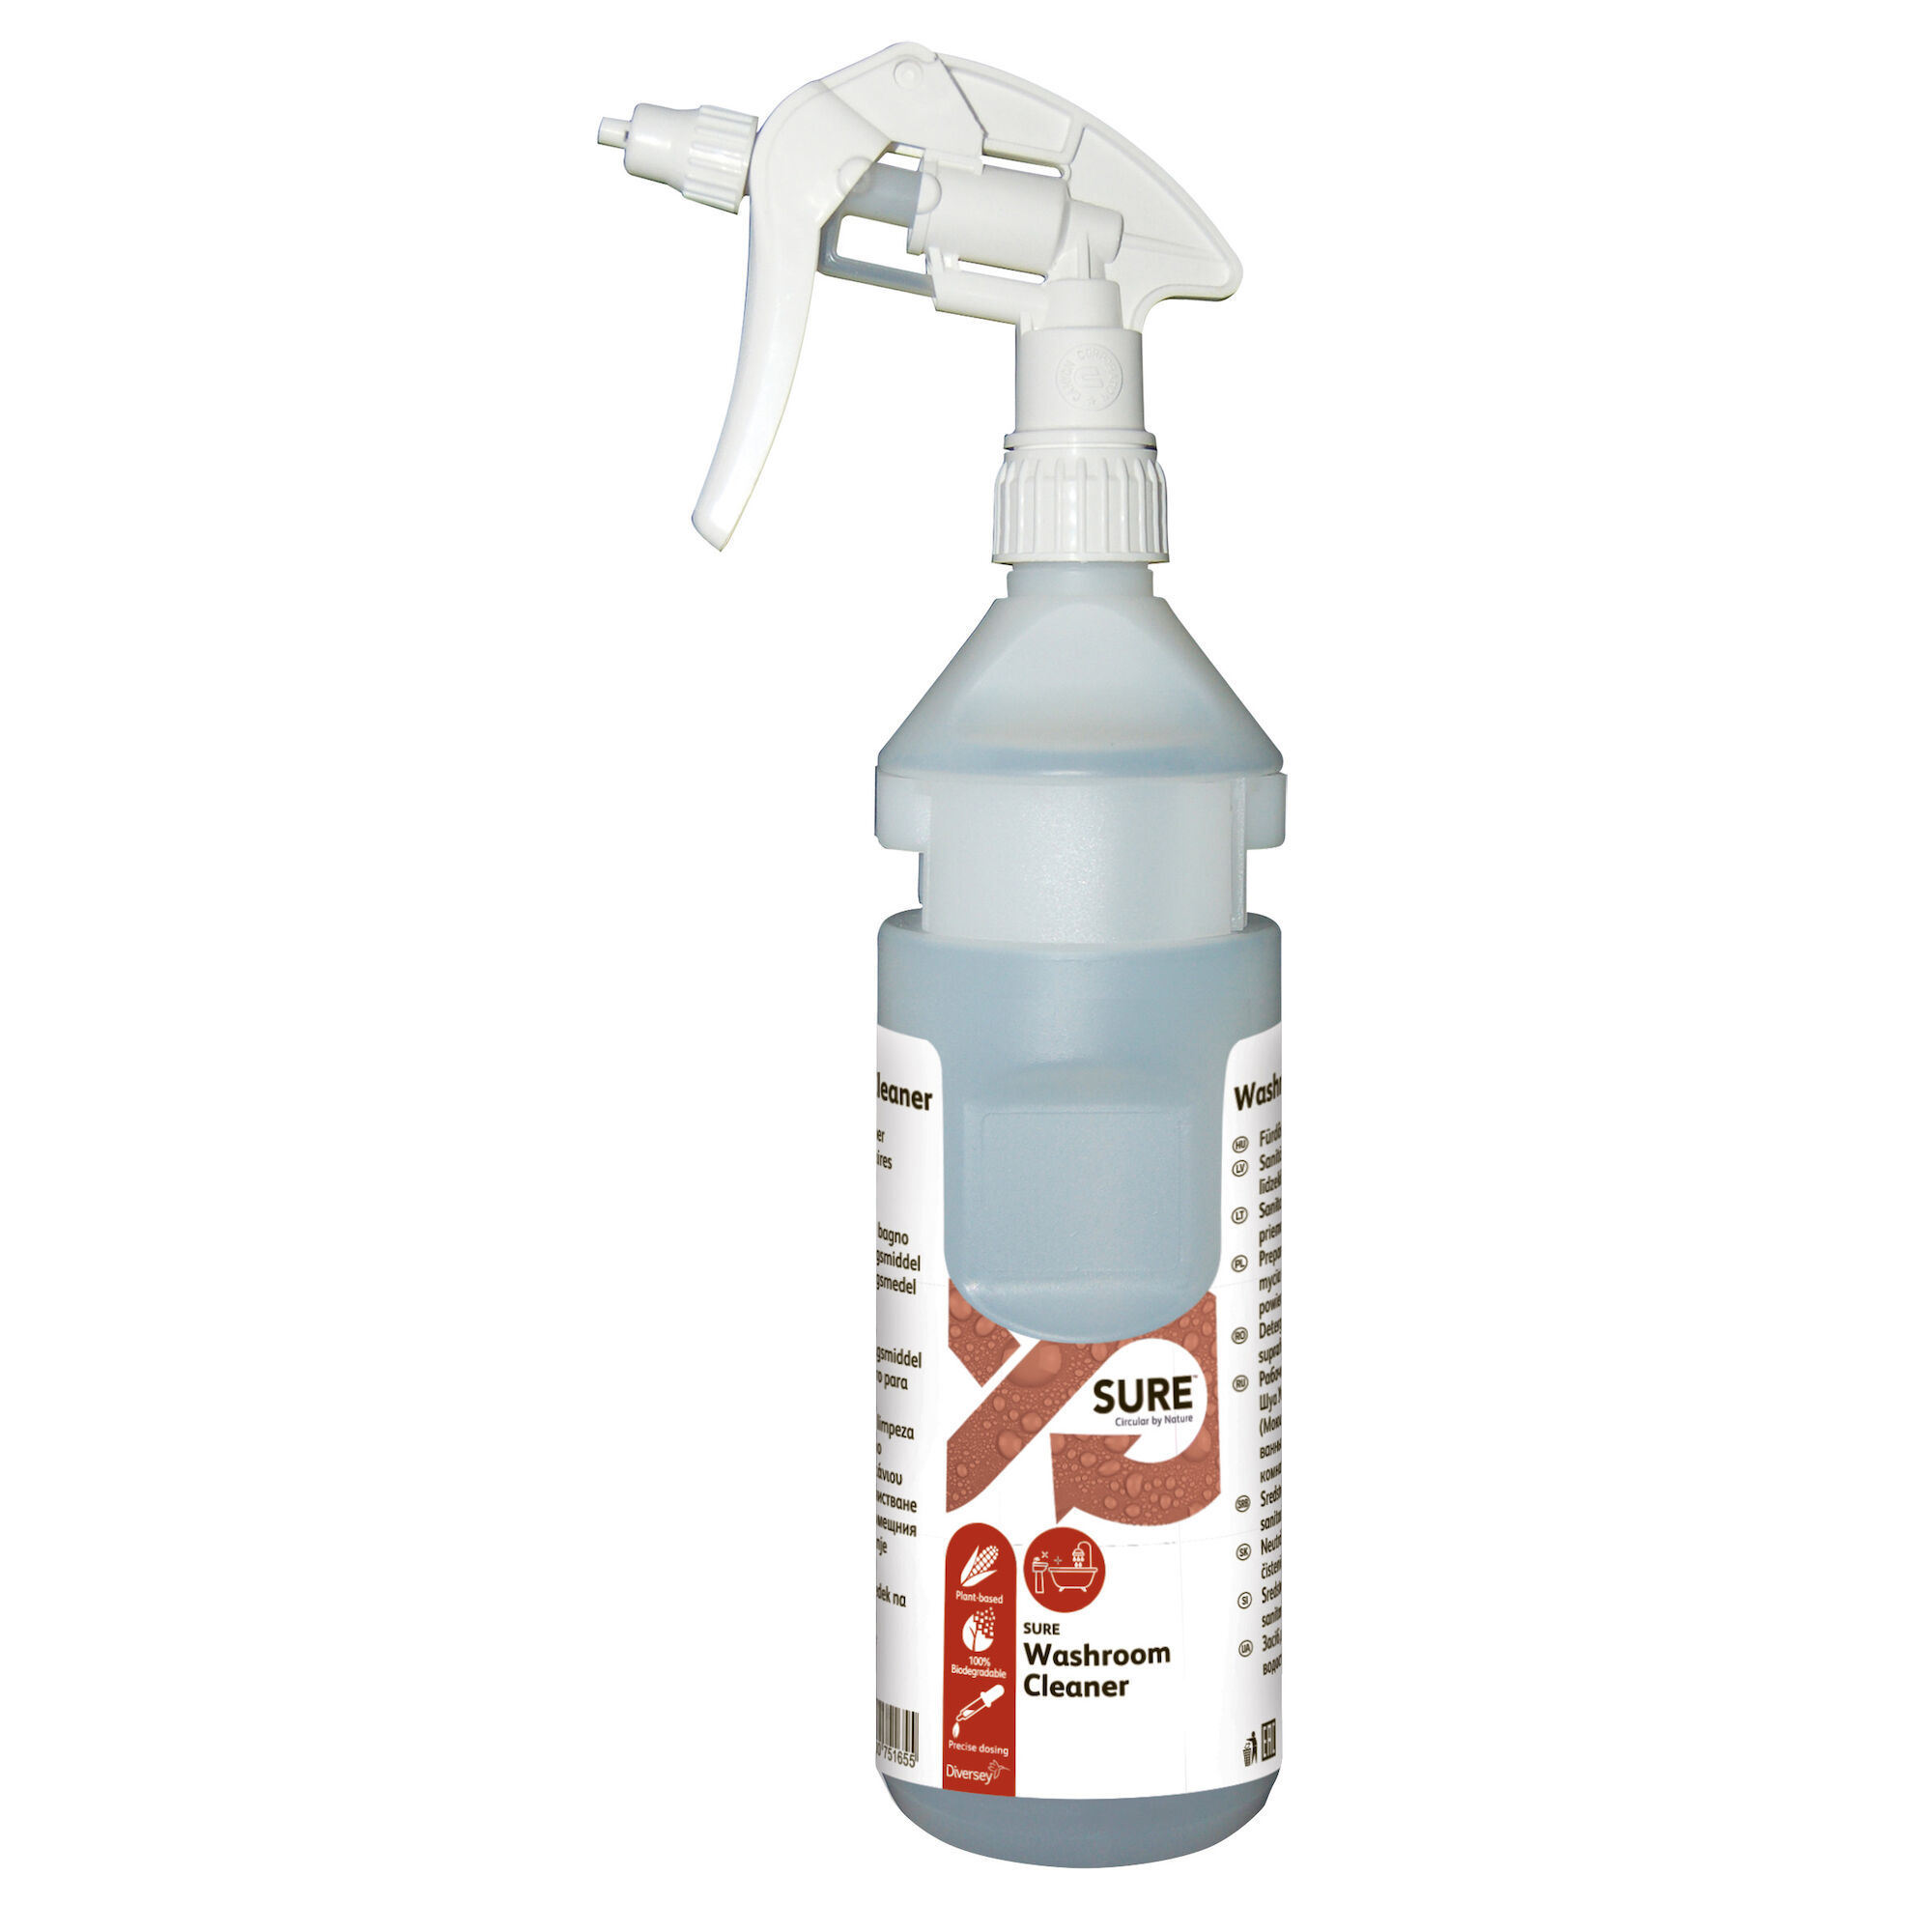 7524030-SURE Washroom cleaner Divermite Refill trigger bottle-AI139694-RGB-20x20cm.jpg